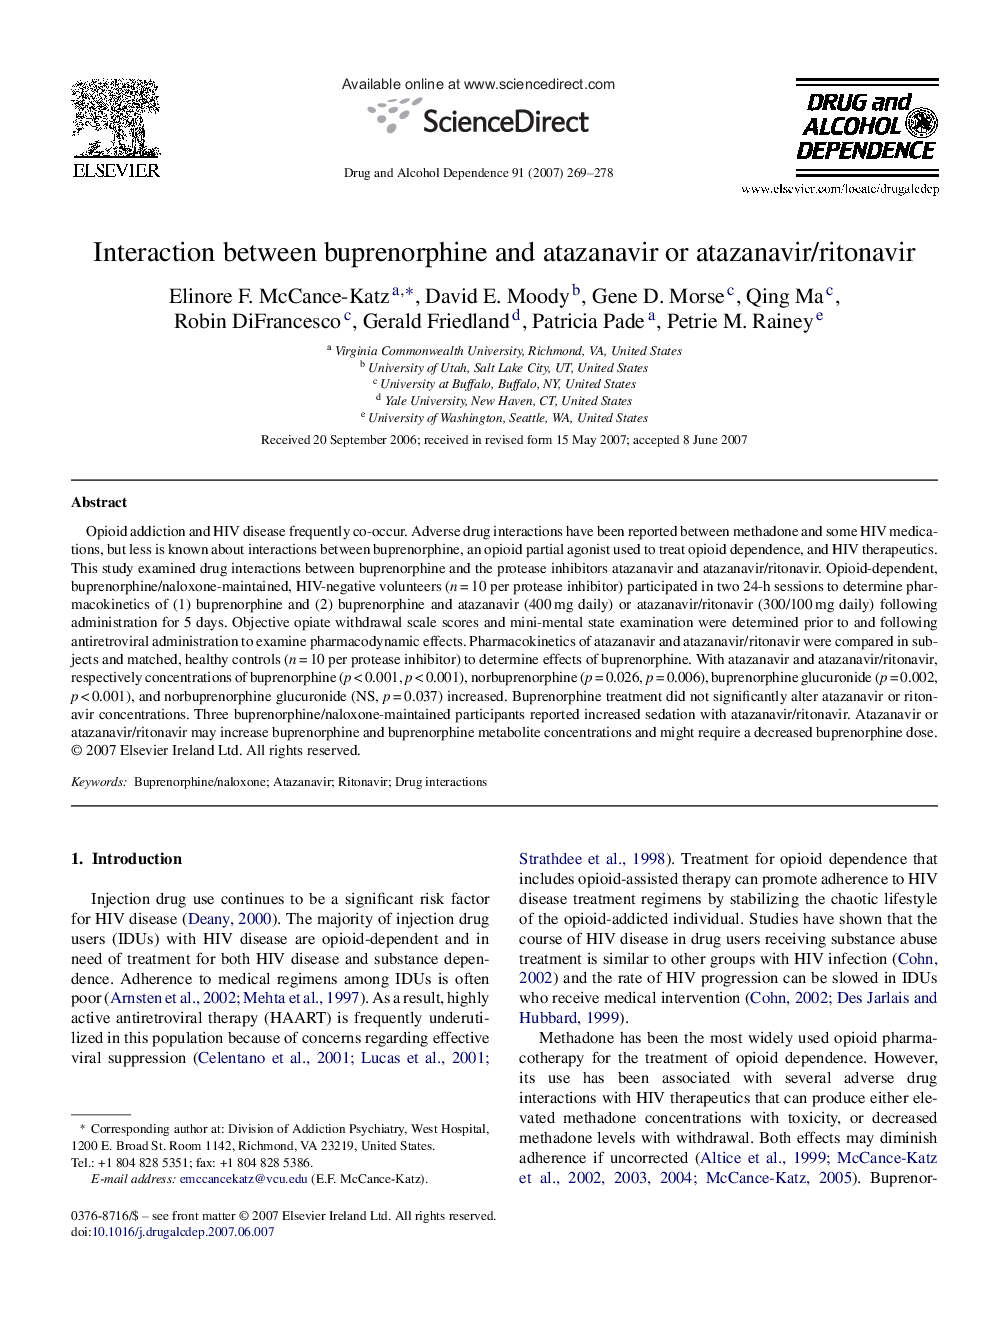 Interaction between buprenorphine and atazanavir or atazanavir/ritonavir